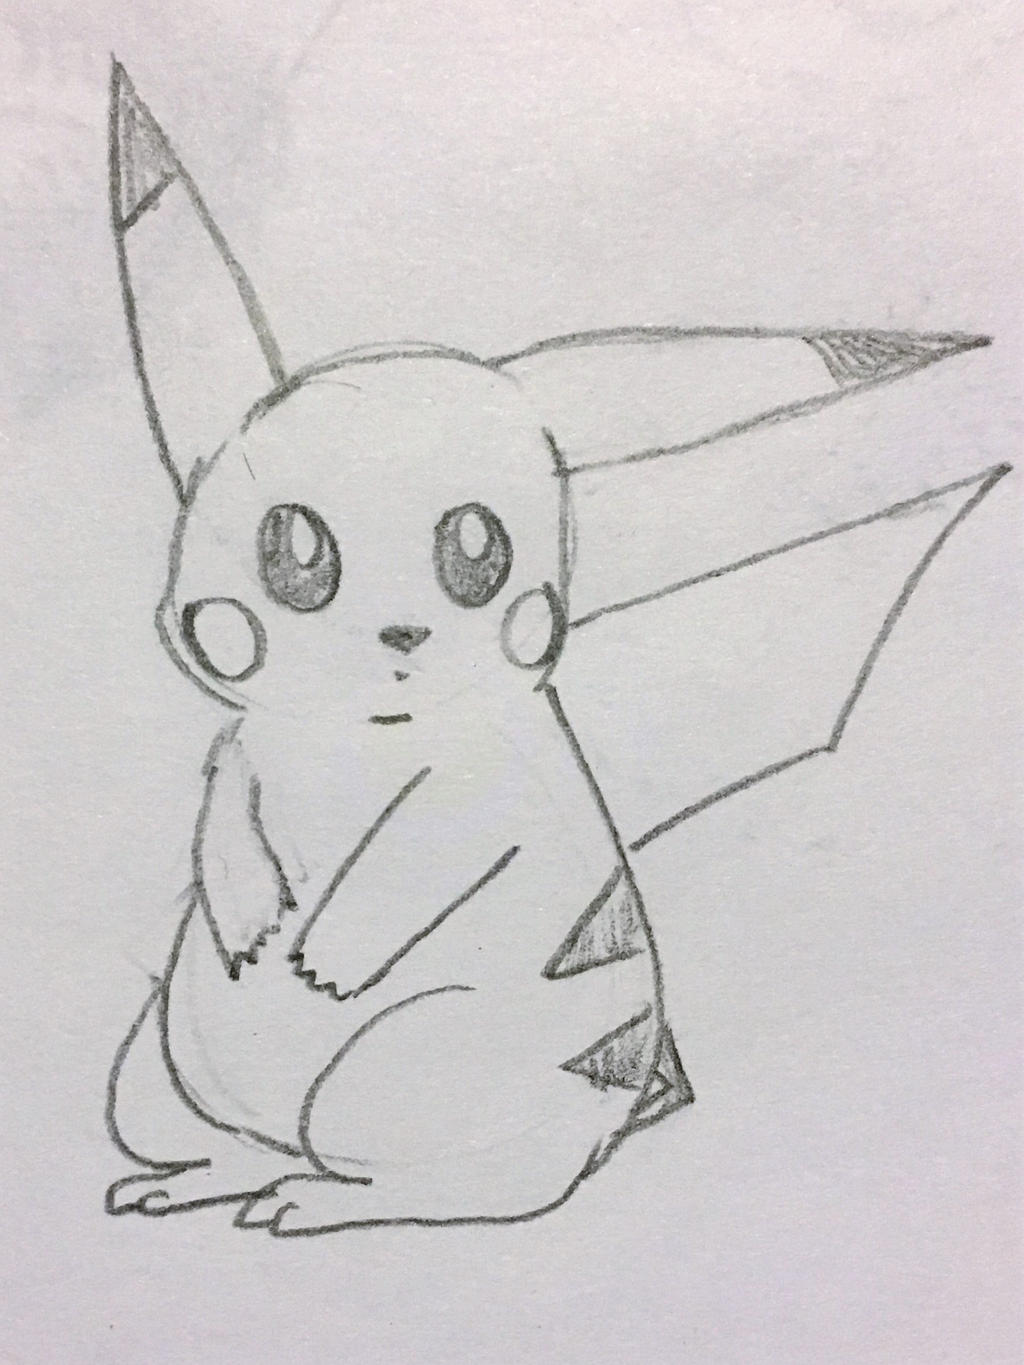 Pikachu Sketch #2 by LightningtheWolf9 on DeviantArt